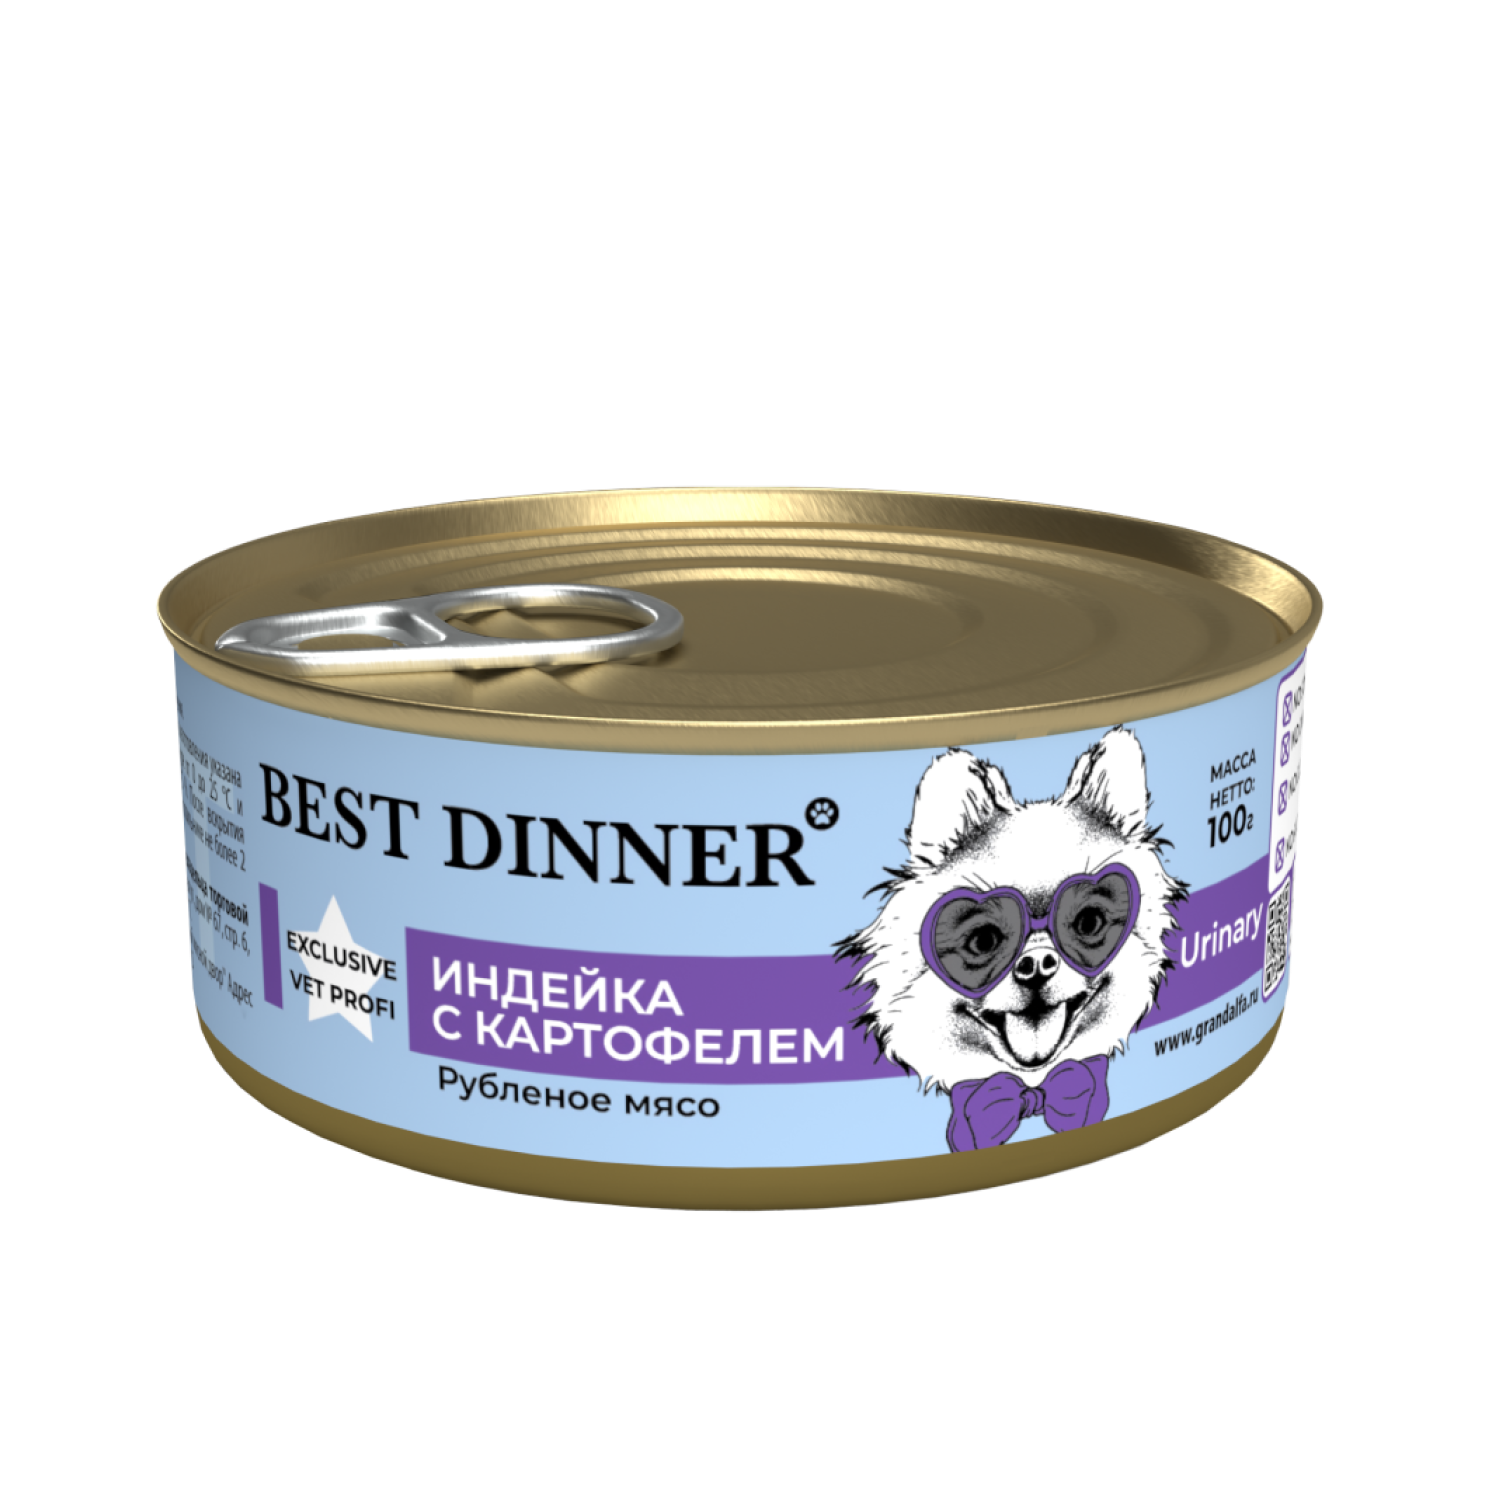 Корм для собак Best Dinner 0.1кг Exclusive Vet Profi Urinary индейка с картофелем - фото 1